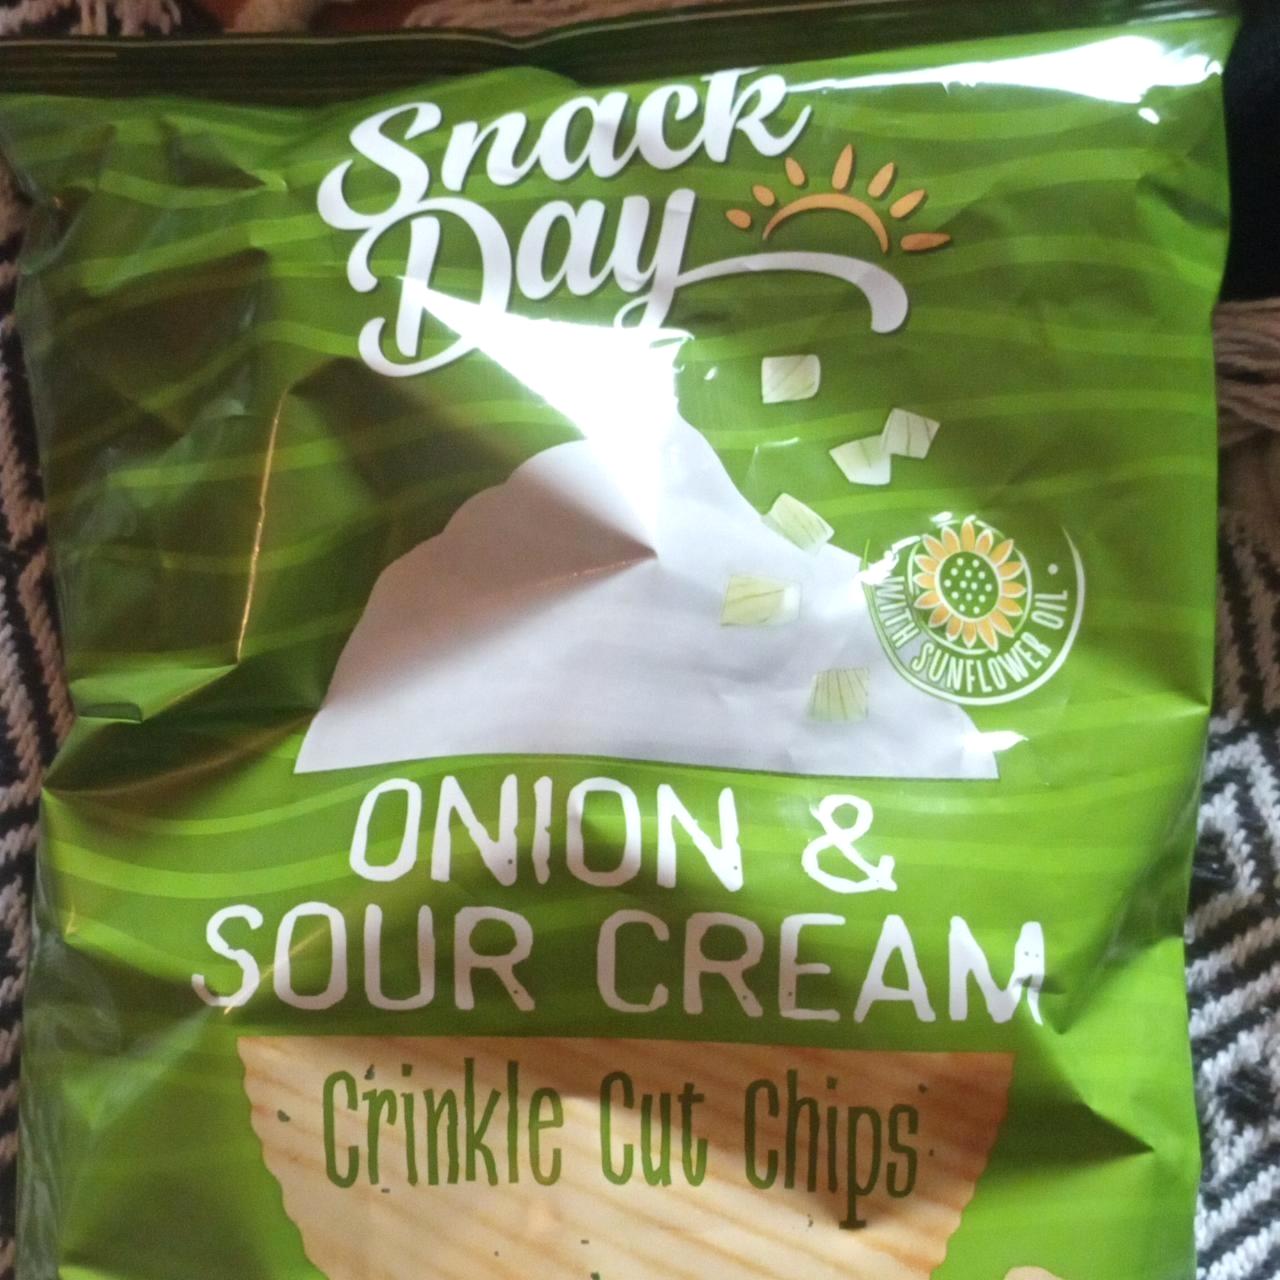 Képek - Onion & sour cream crinkle cut chips Snack Day